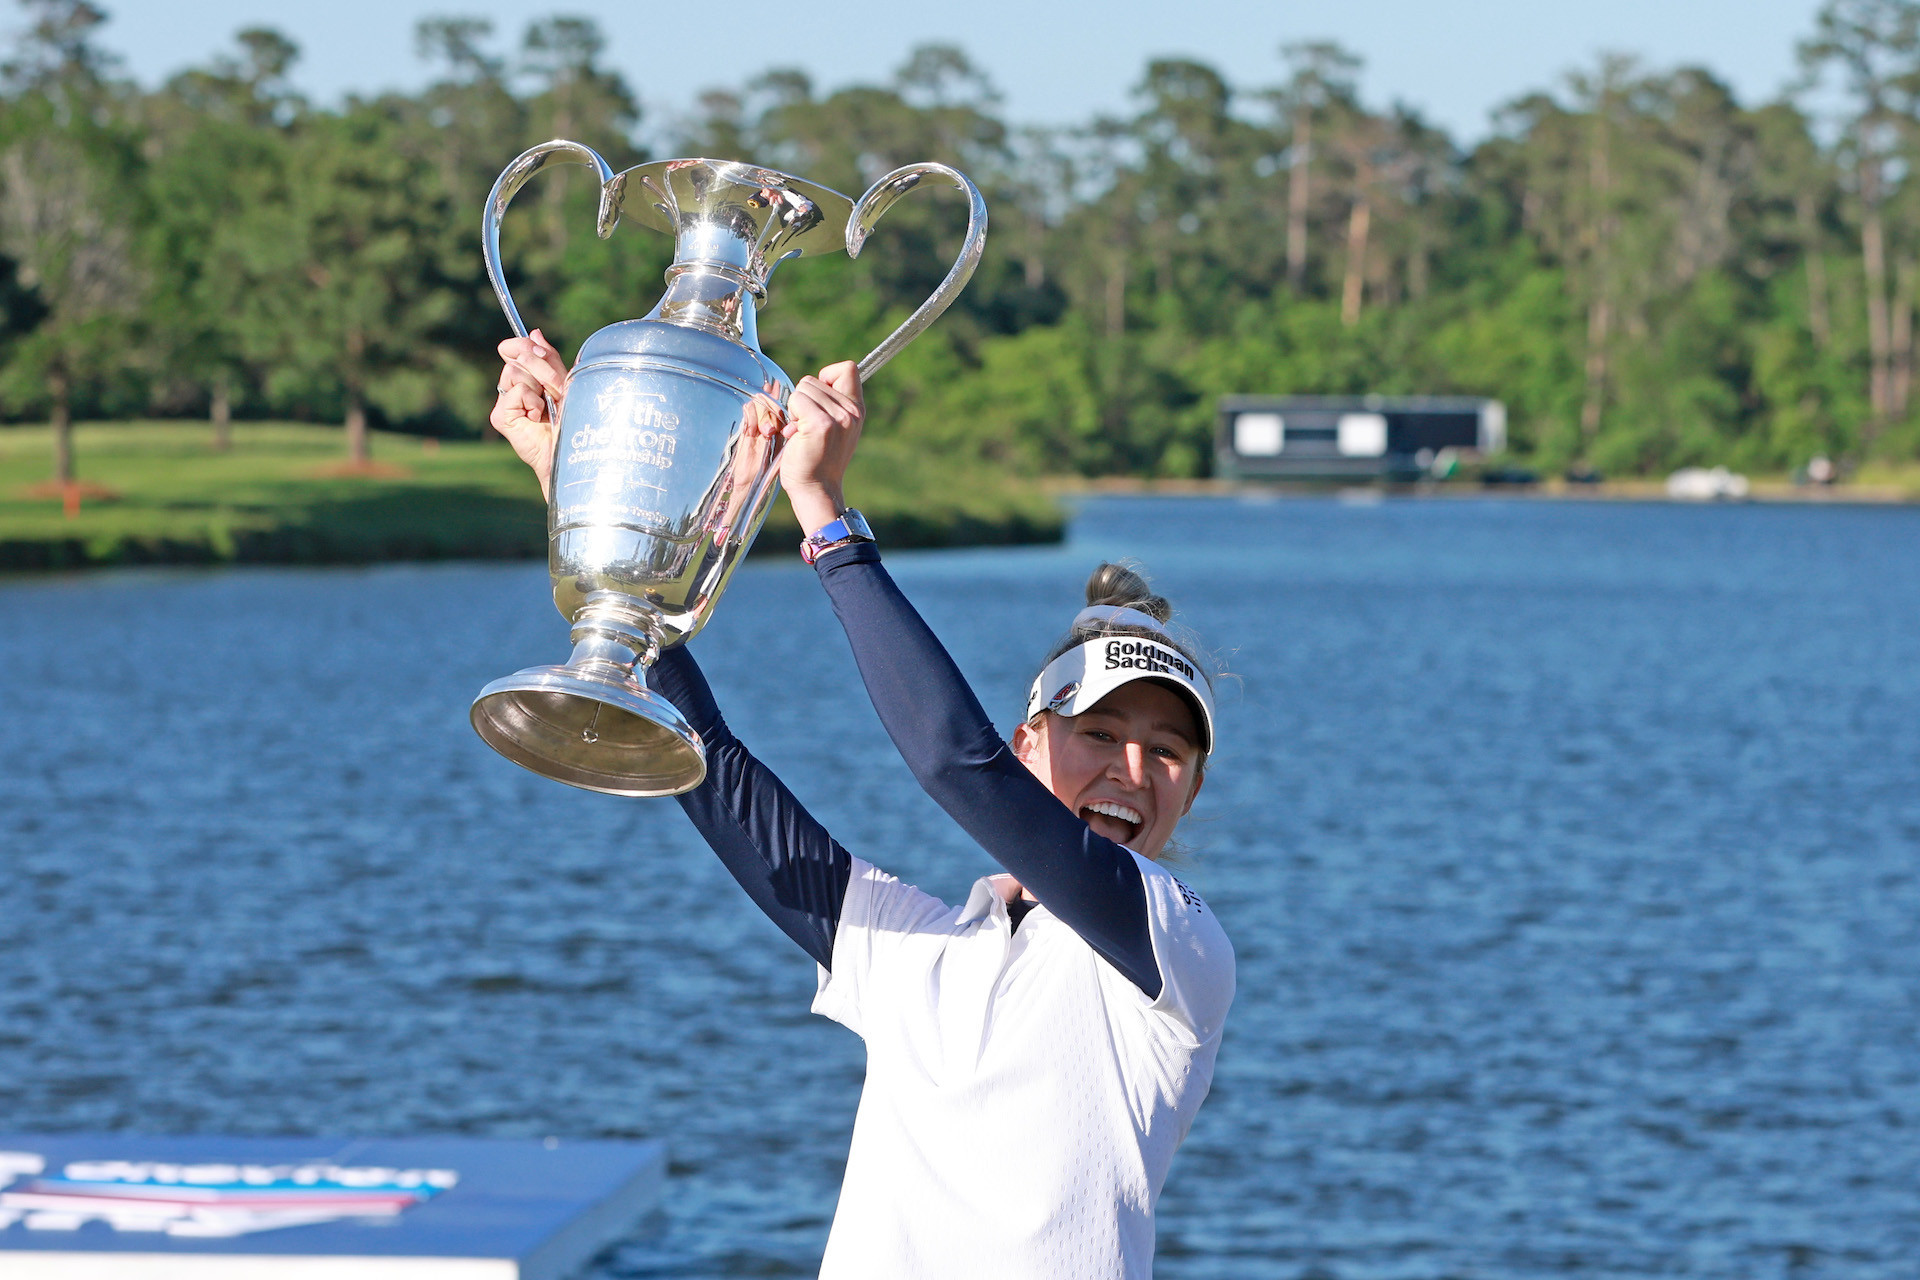 Nelly Korda ties LPGA consecutive wins record with Chevron victory